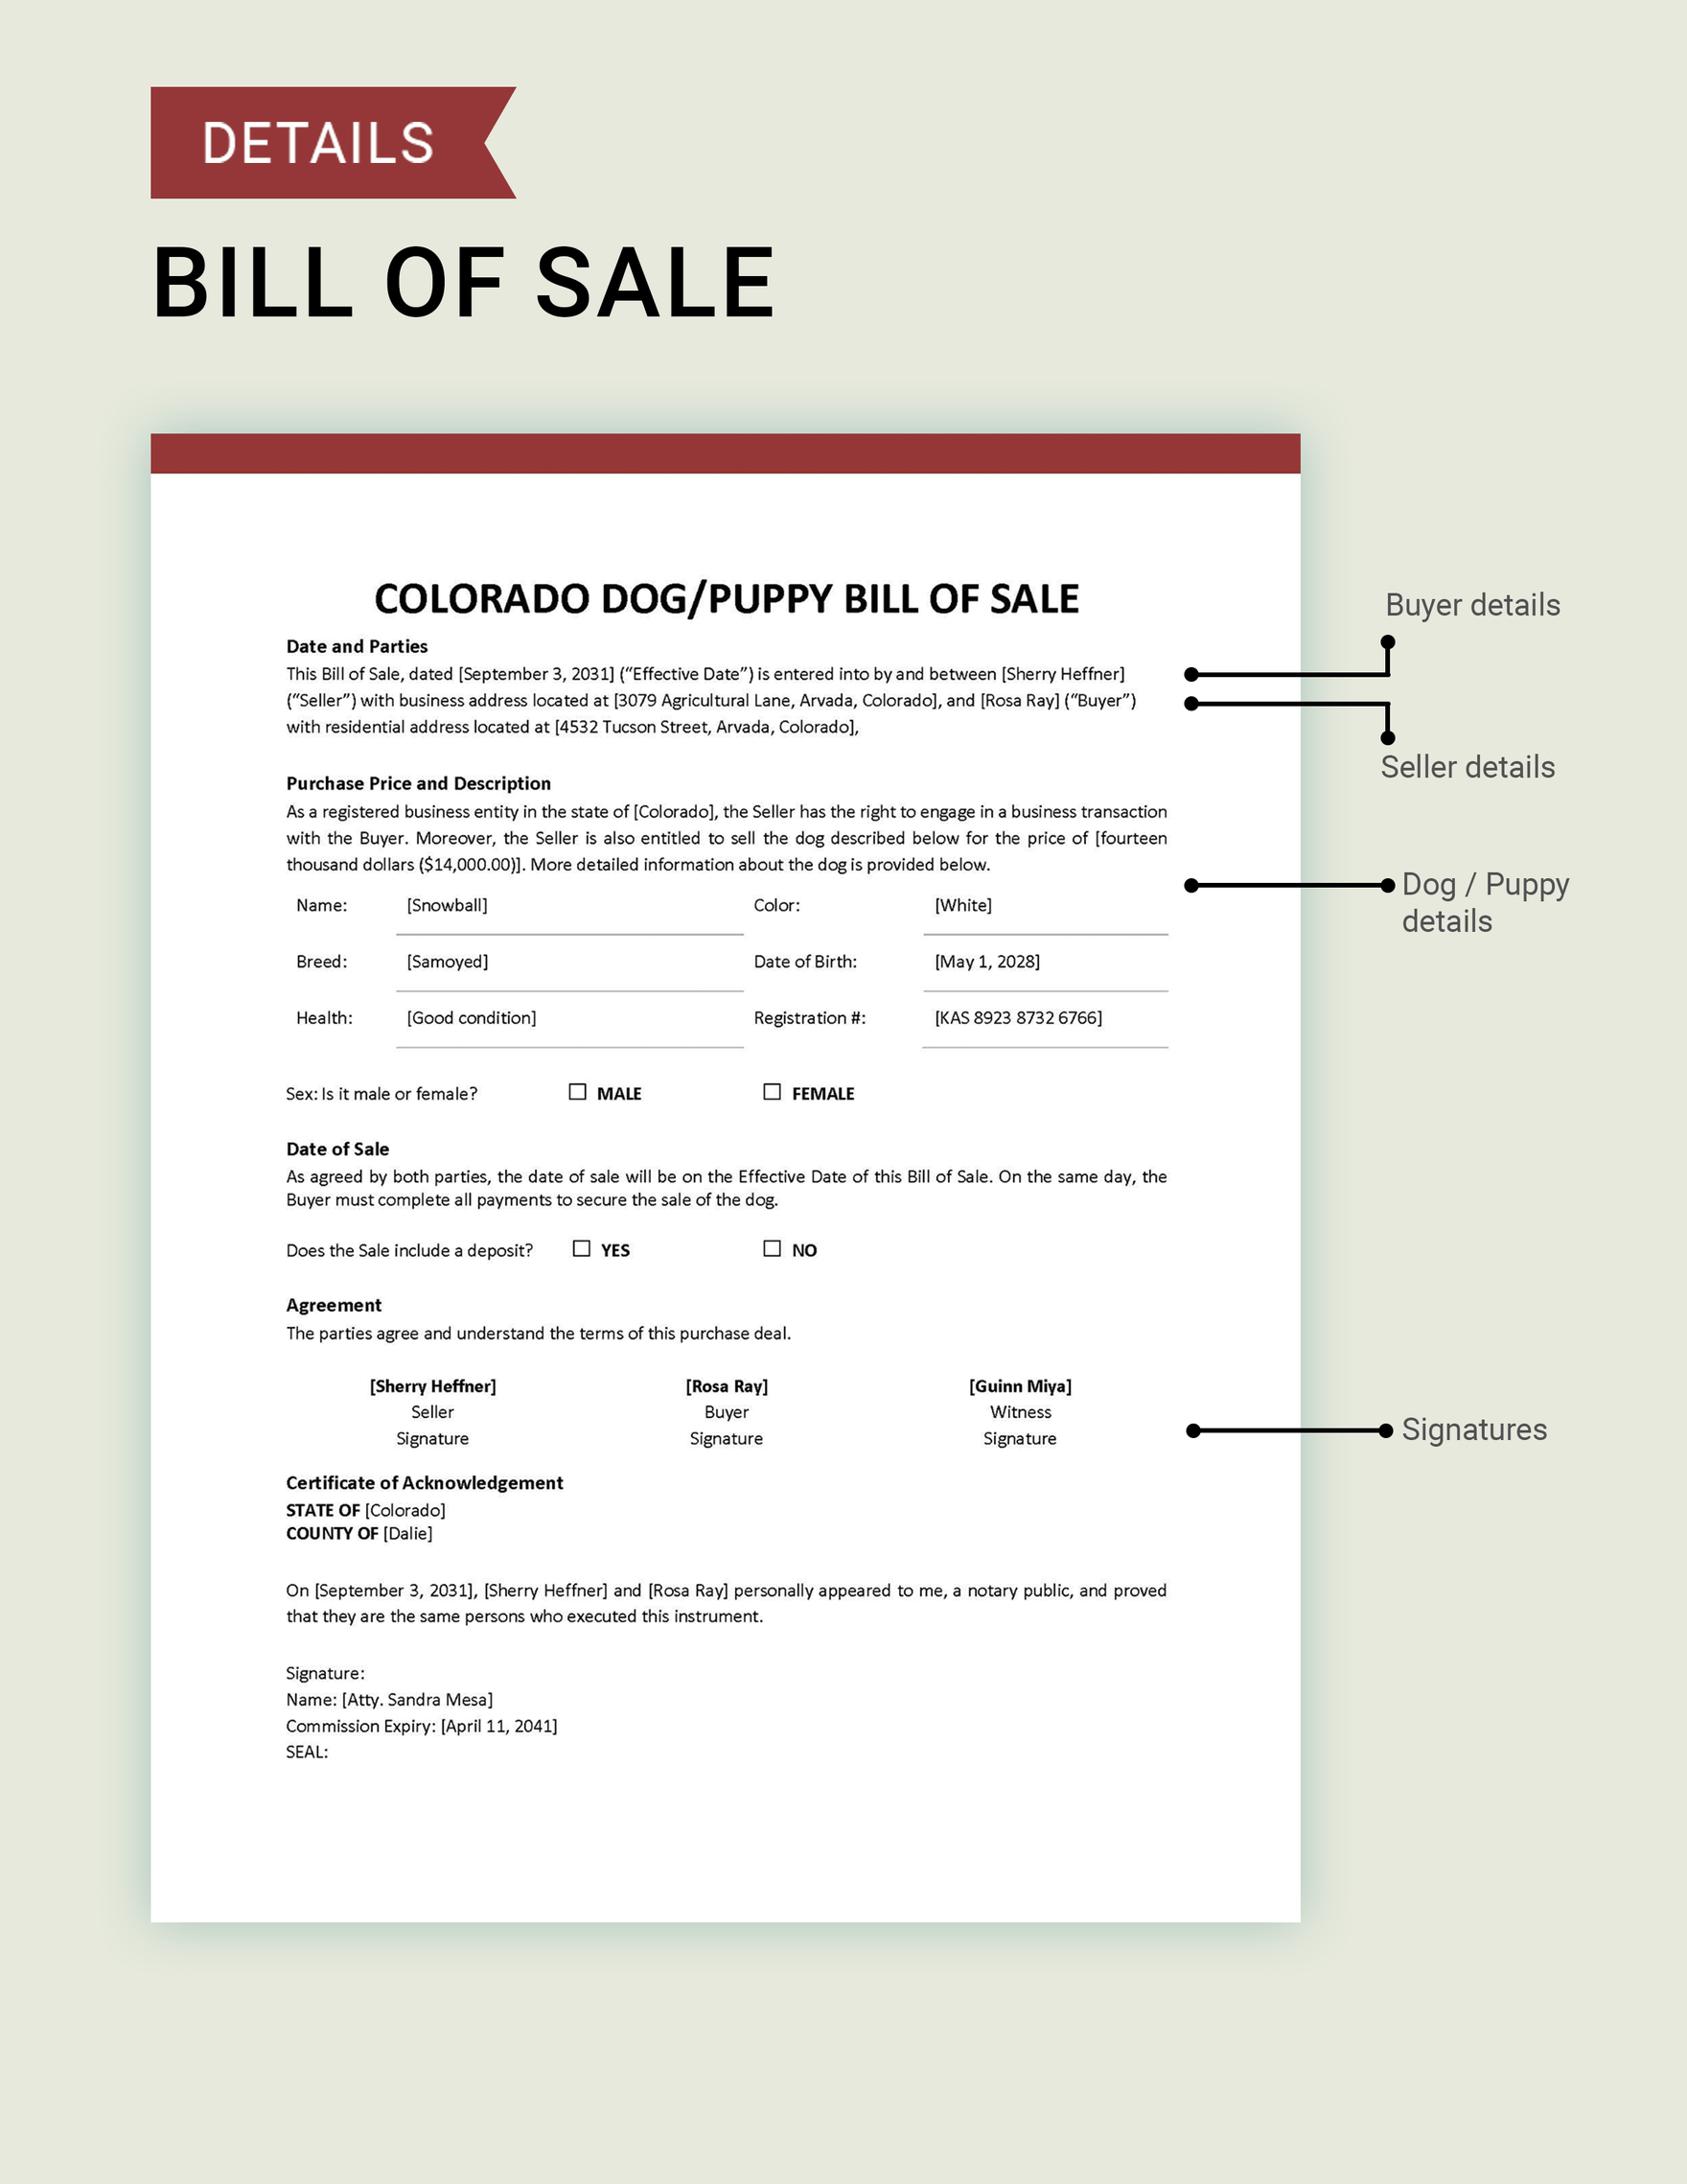 Colorado Dog / Puppy Bill of Sale Template